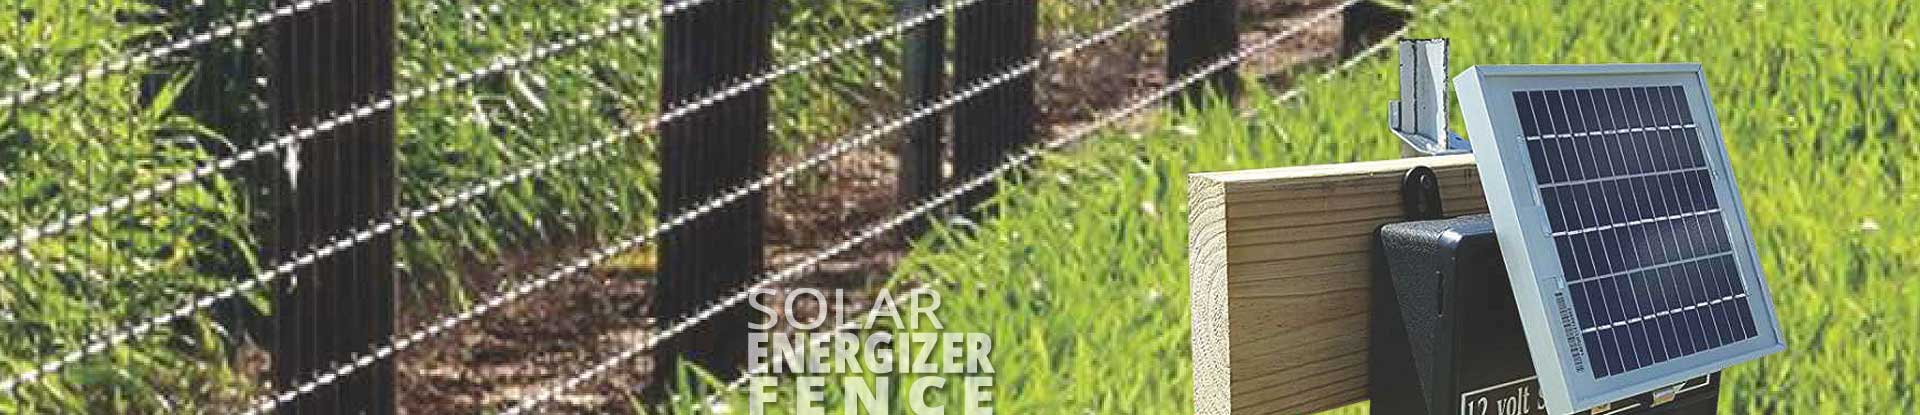 Solar Fence Energizer | Captain Polyplast Ltd.